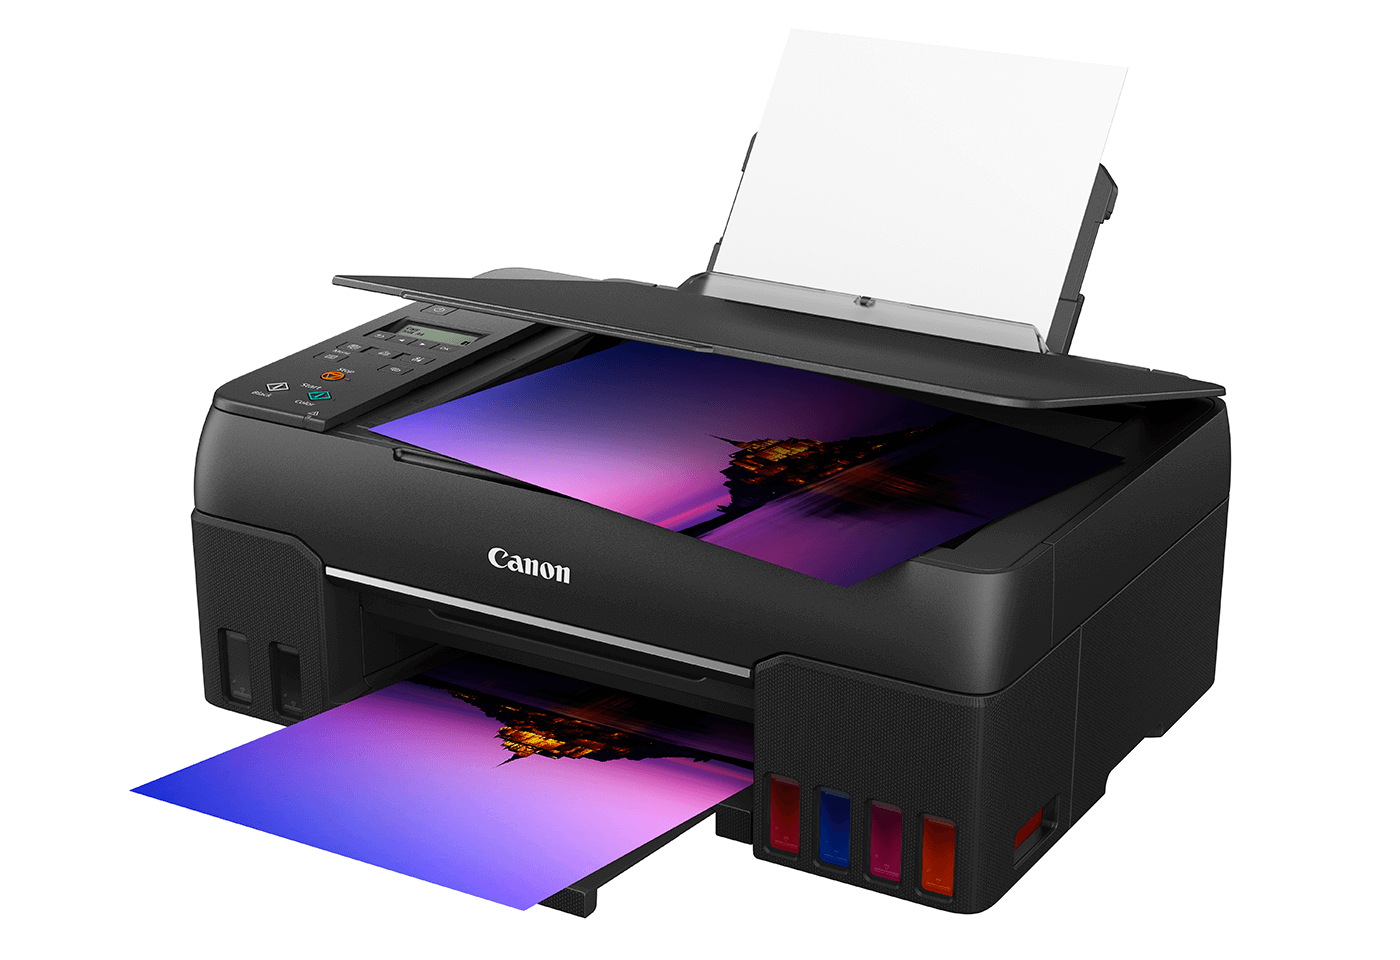 Side profile image of Pixma G660 MegaTank printer with tray open